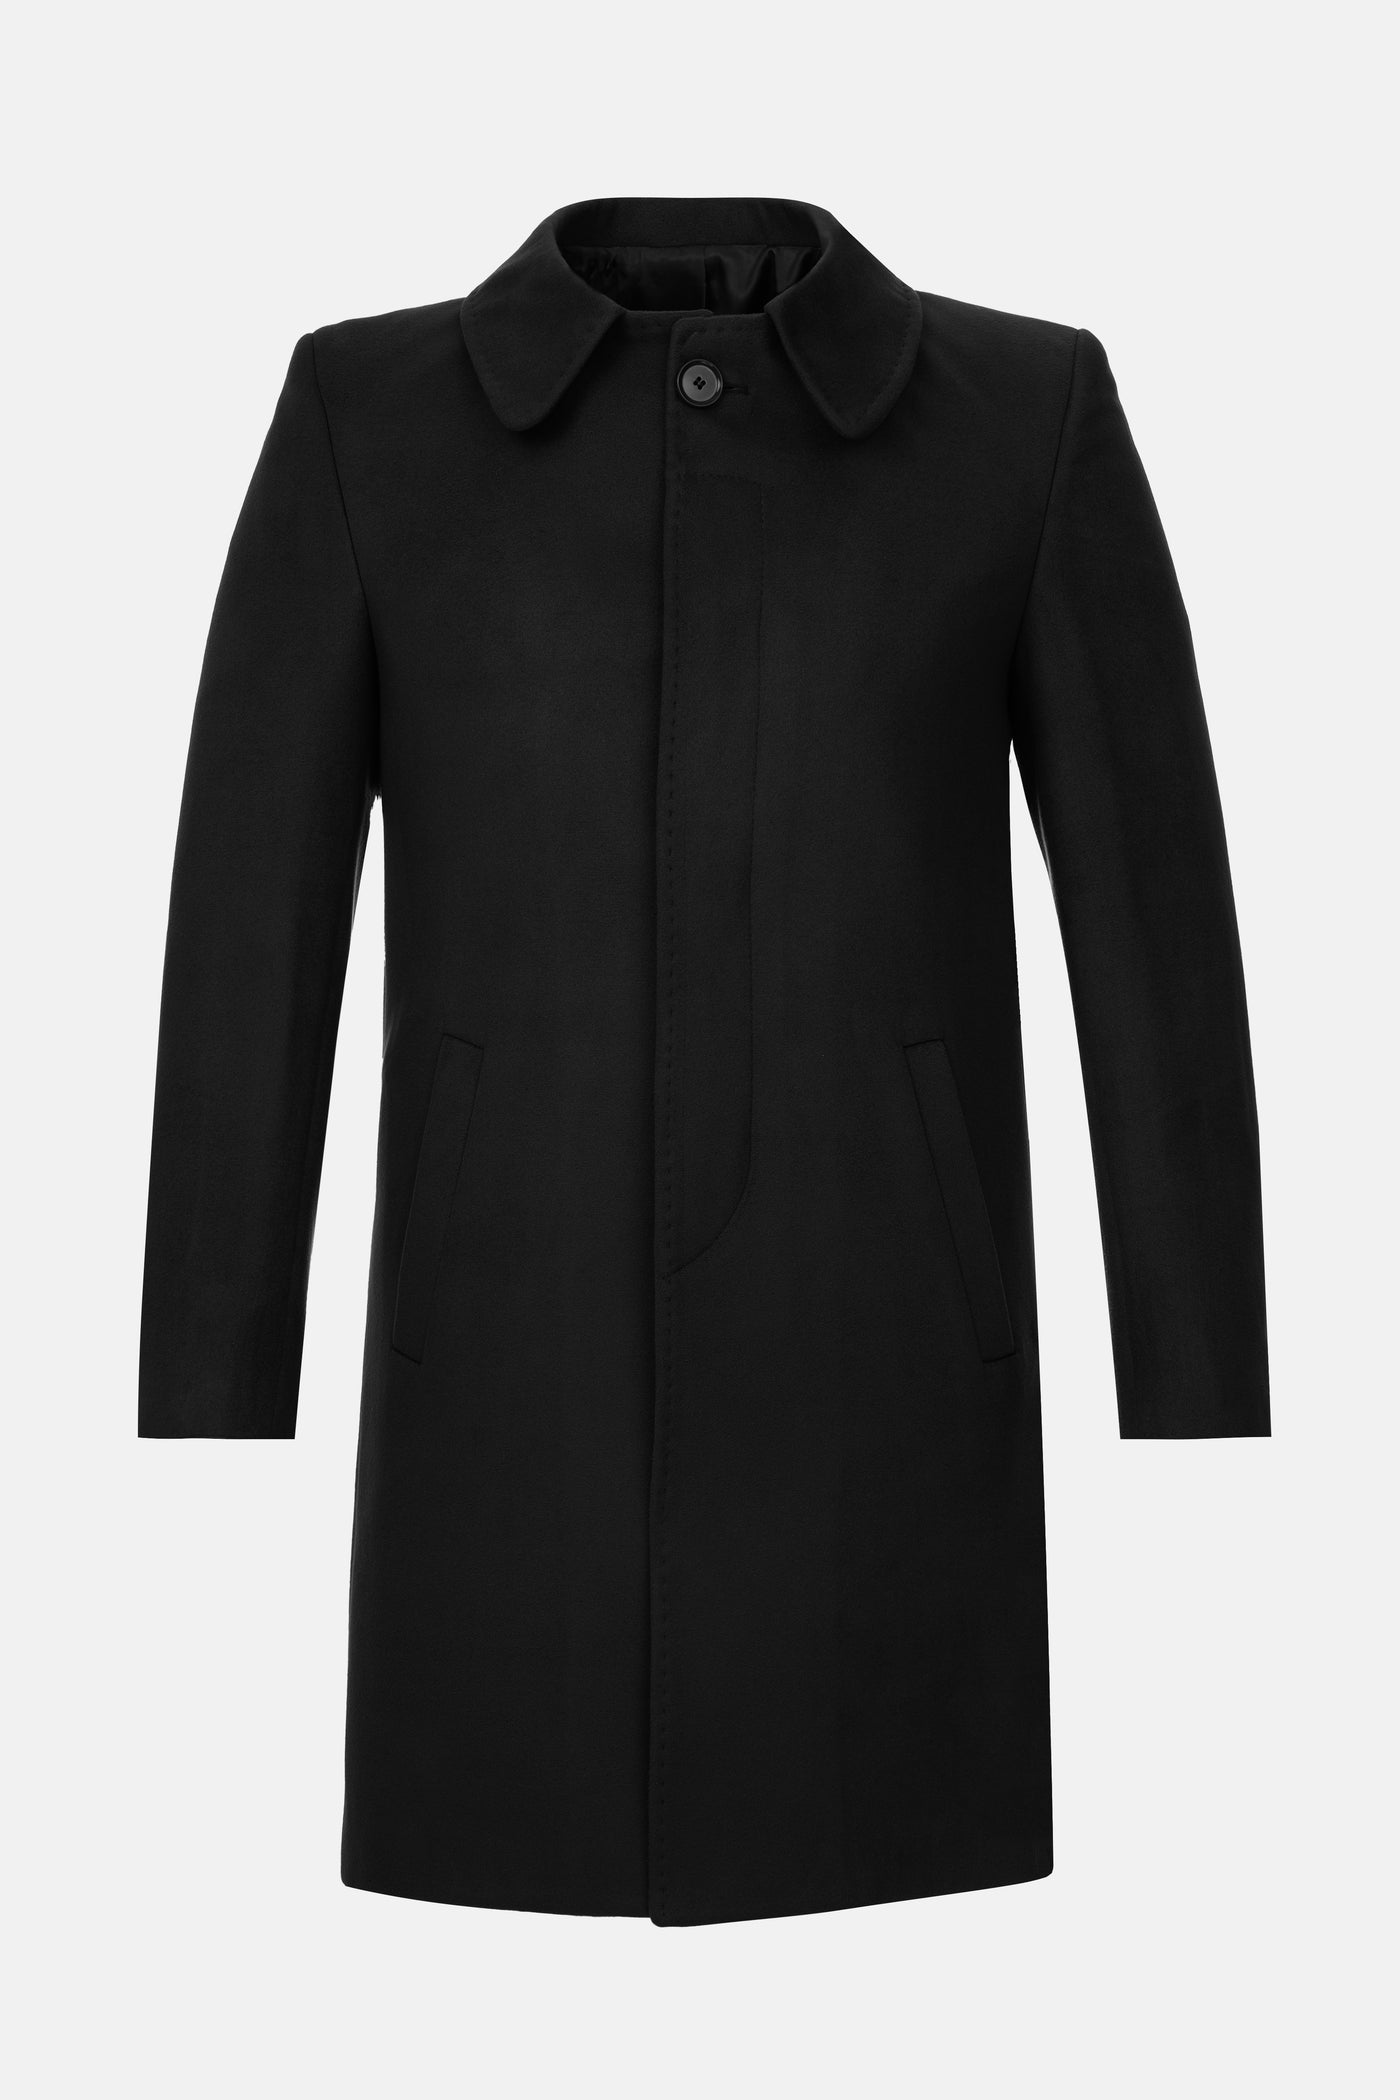 Mac Basic Long Dark Black Coat